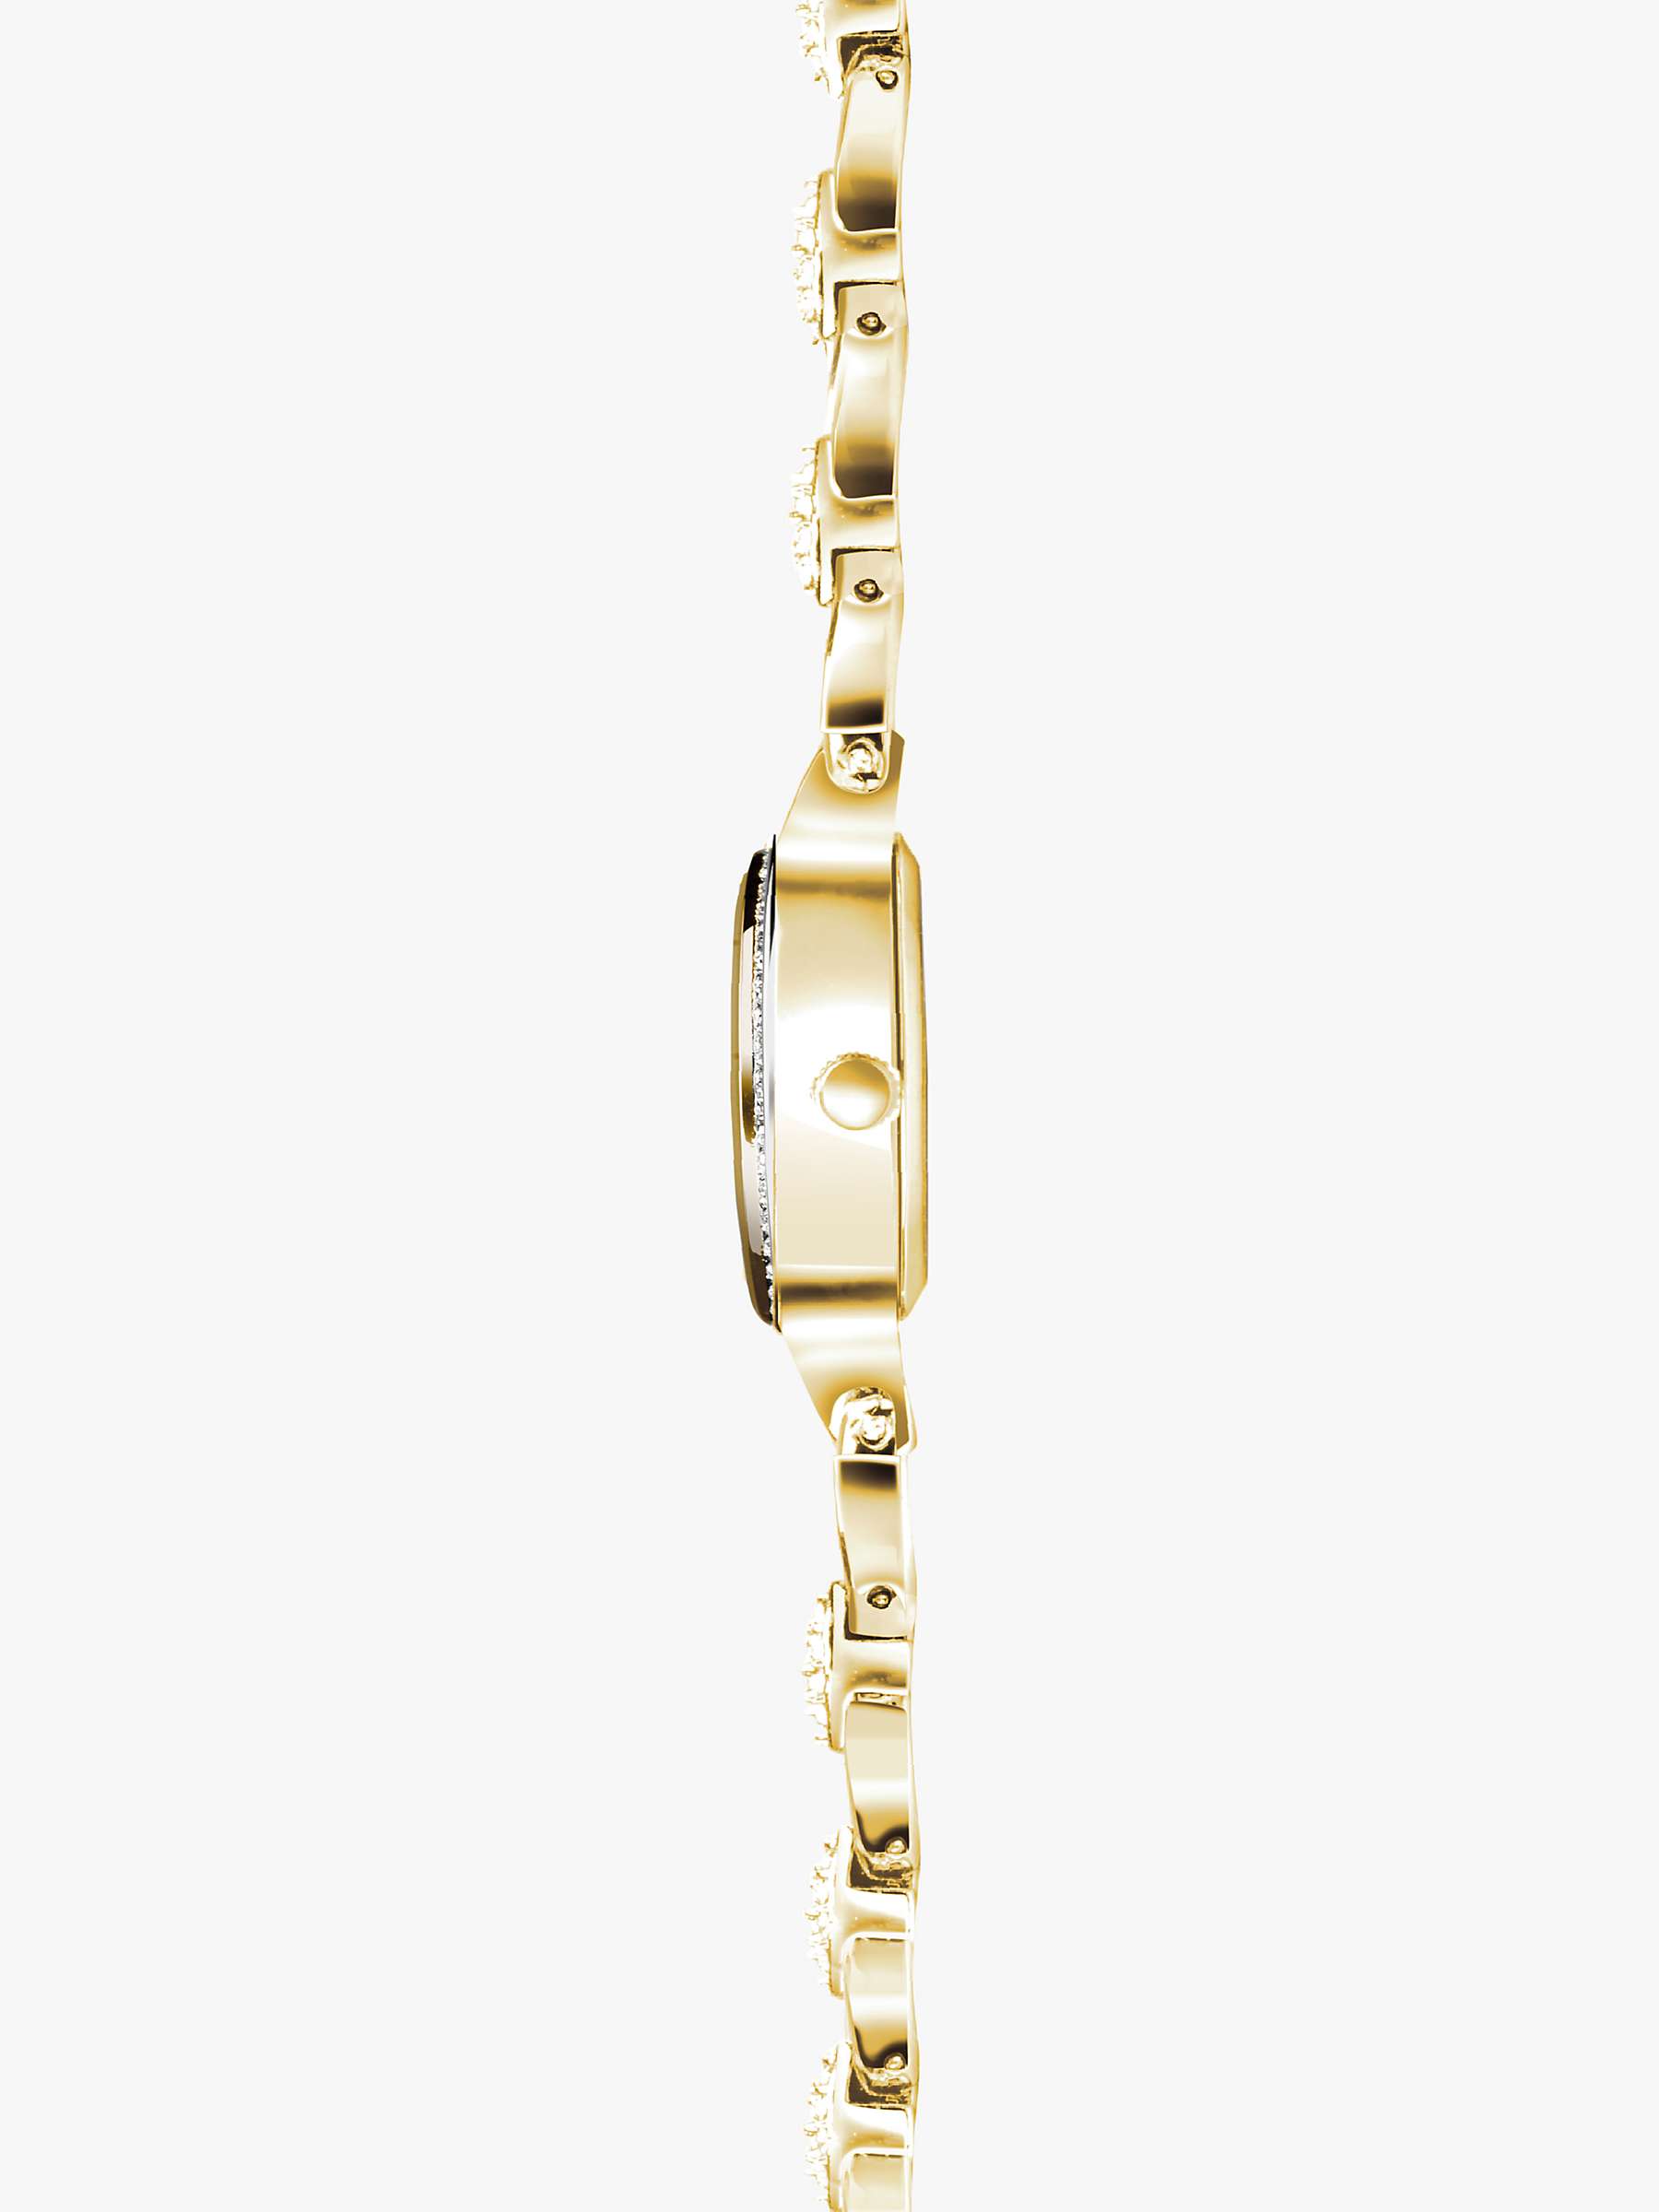 Buy Sekonda 49020 Women's Crystal Watch, Bracelet, Pendant Necklace & Stud Earrings Jewellery Set Online at johnlewis.com